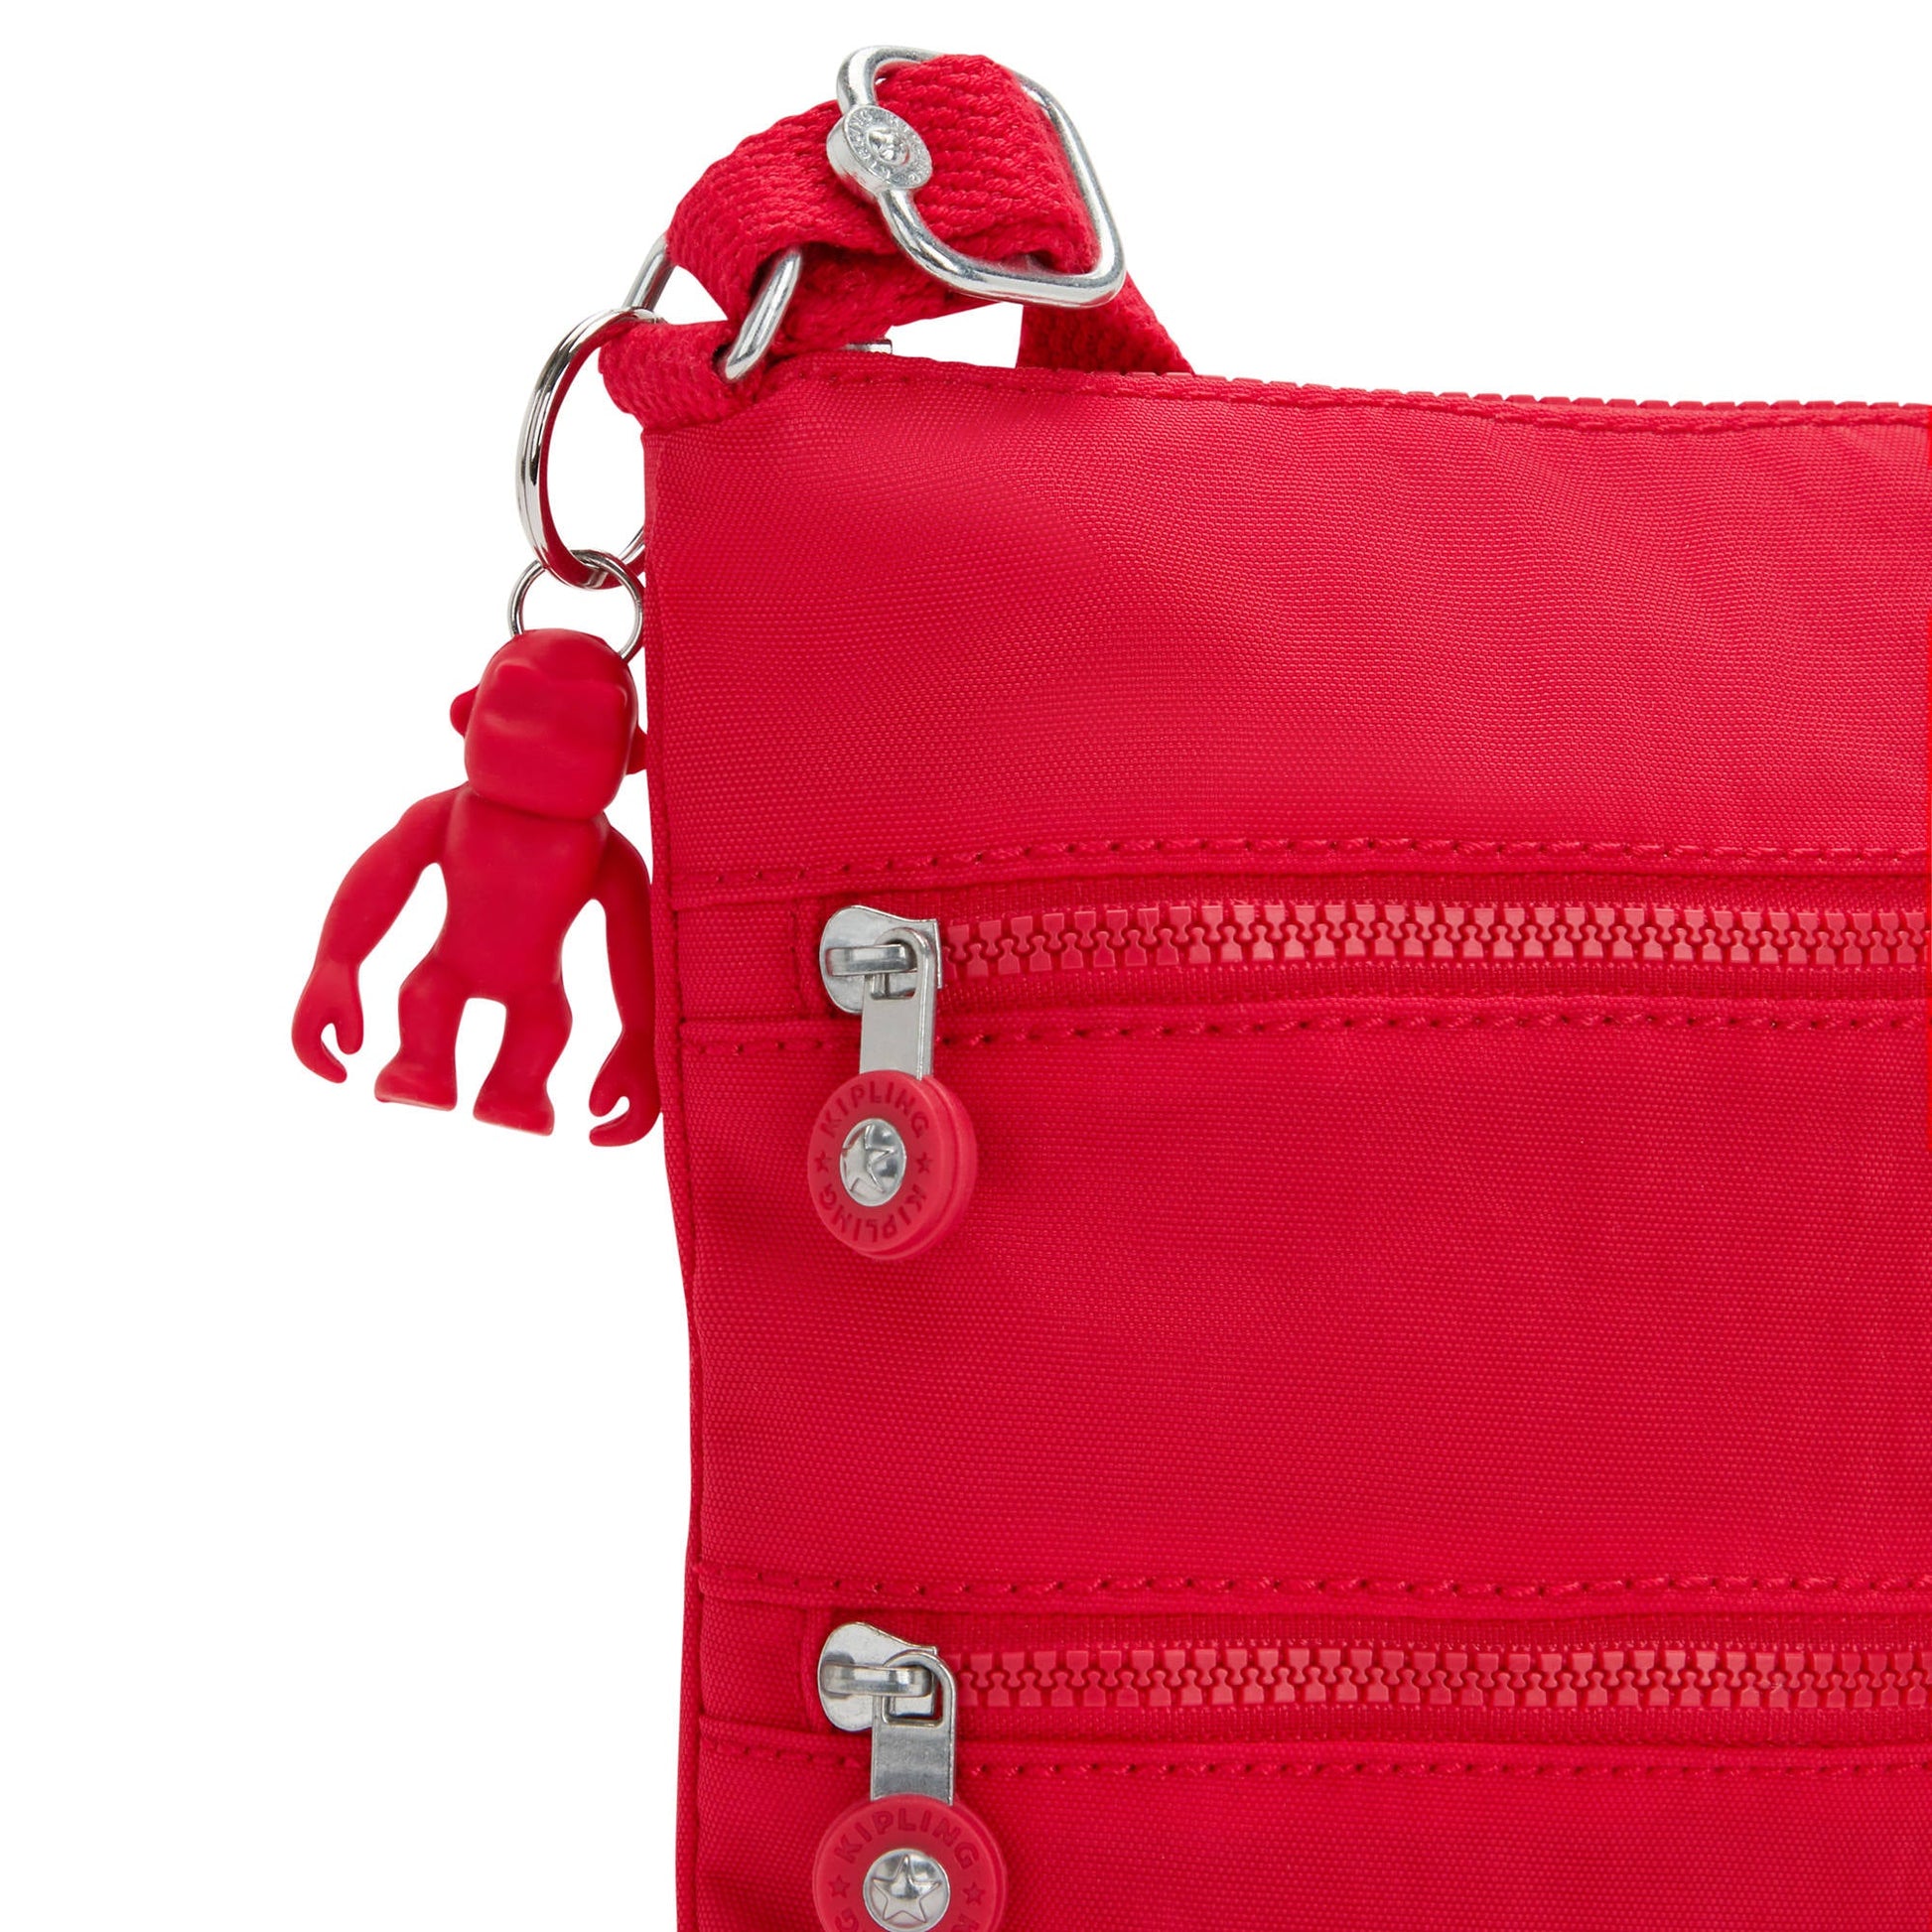 Kipling Keiko Crossbody Mini Bag - Red Rouge